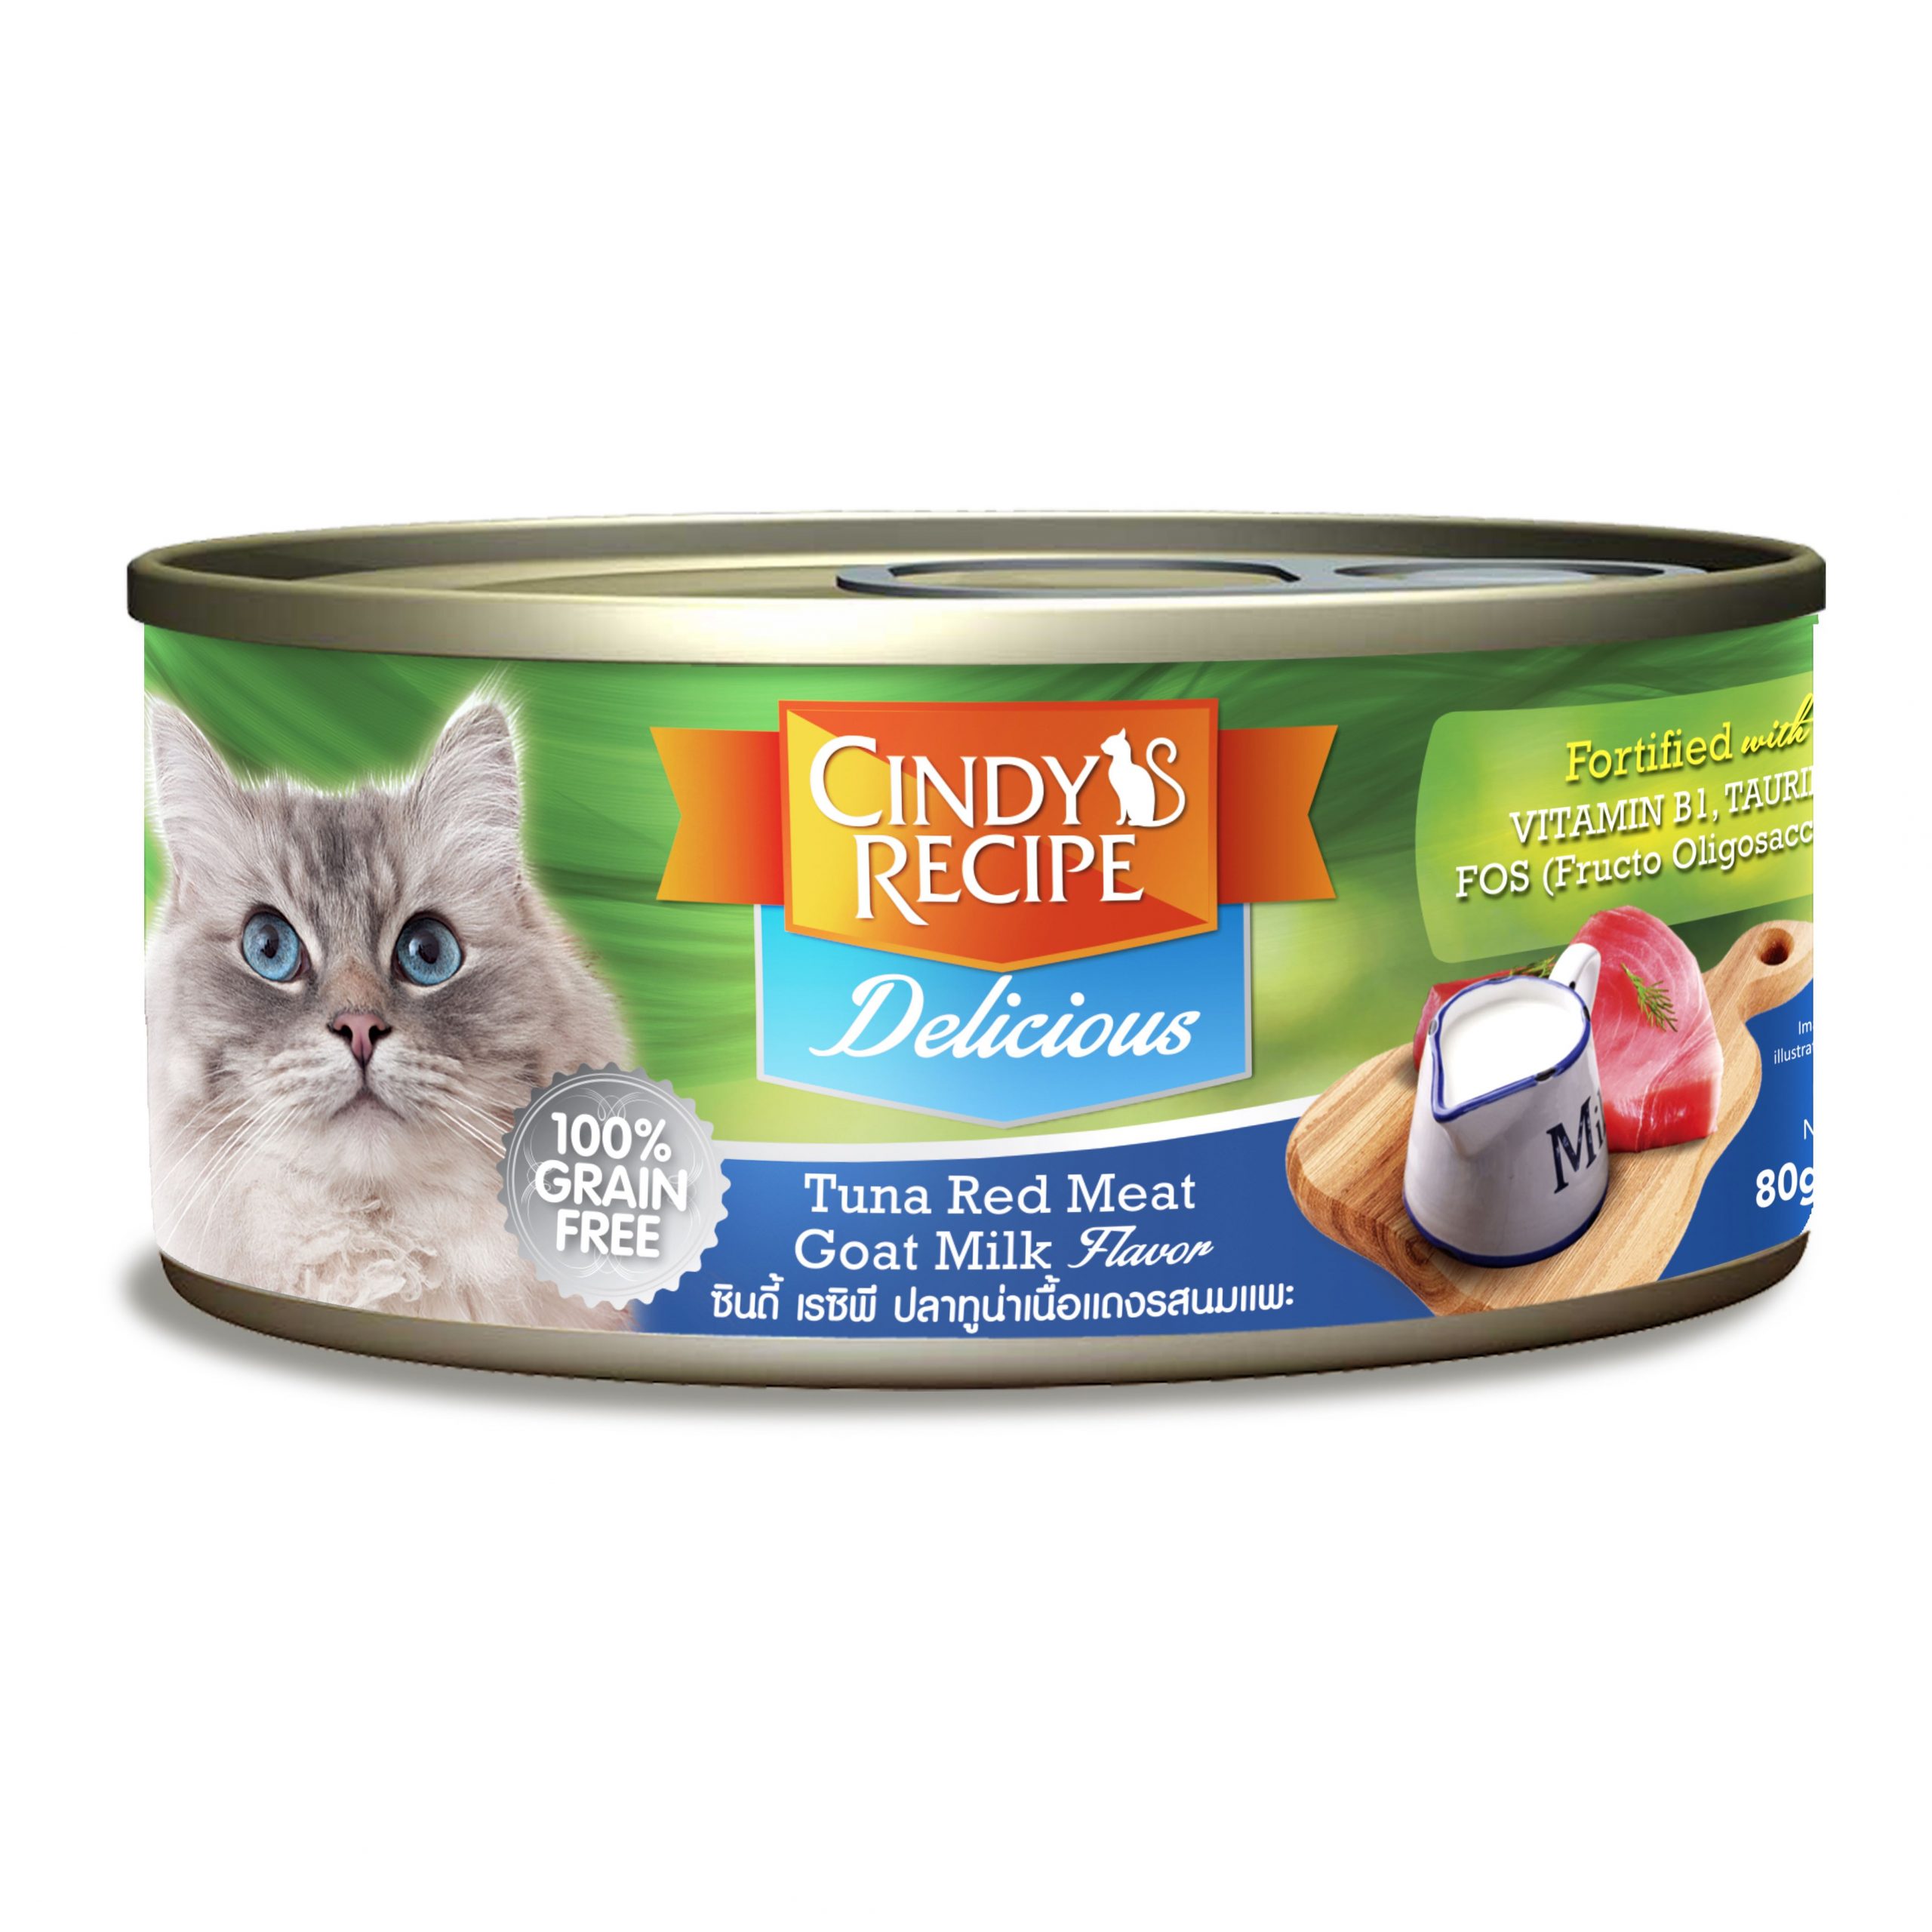 Cindy’s Recipe Delicious_Tuna Red Meat Goat Milk Flavor